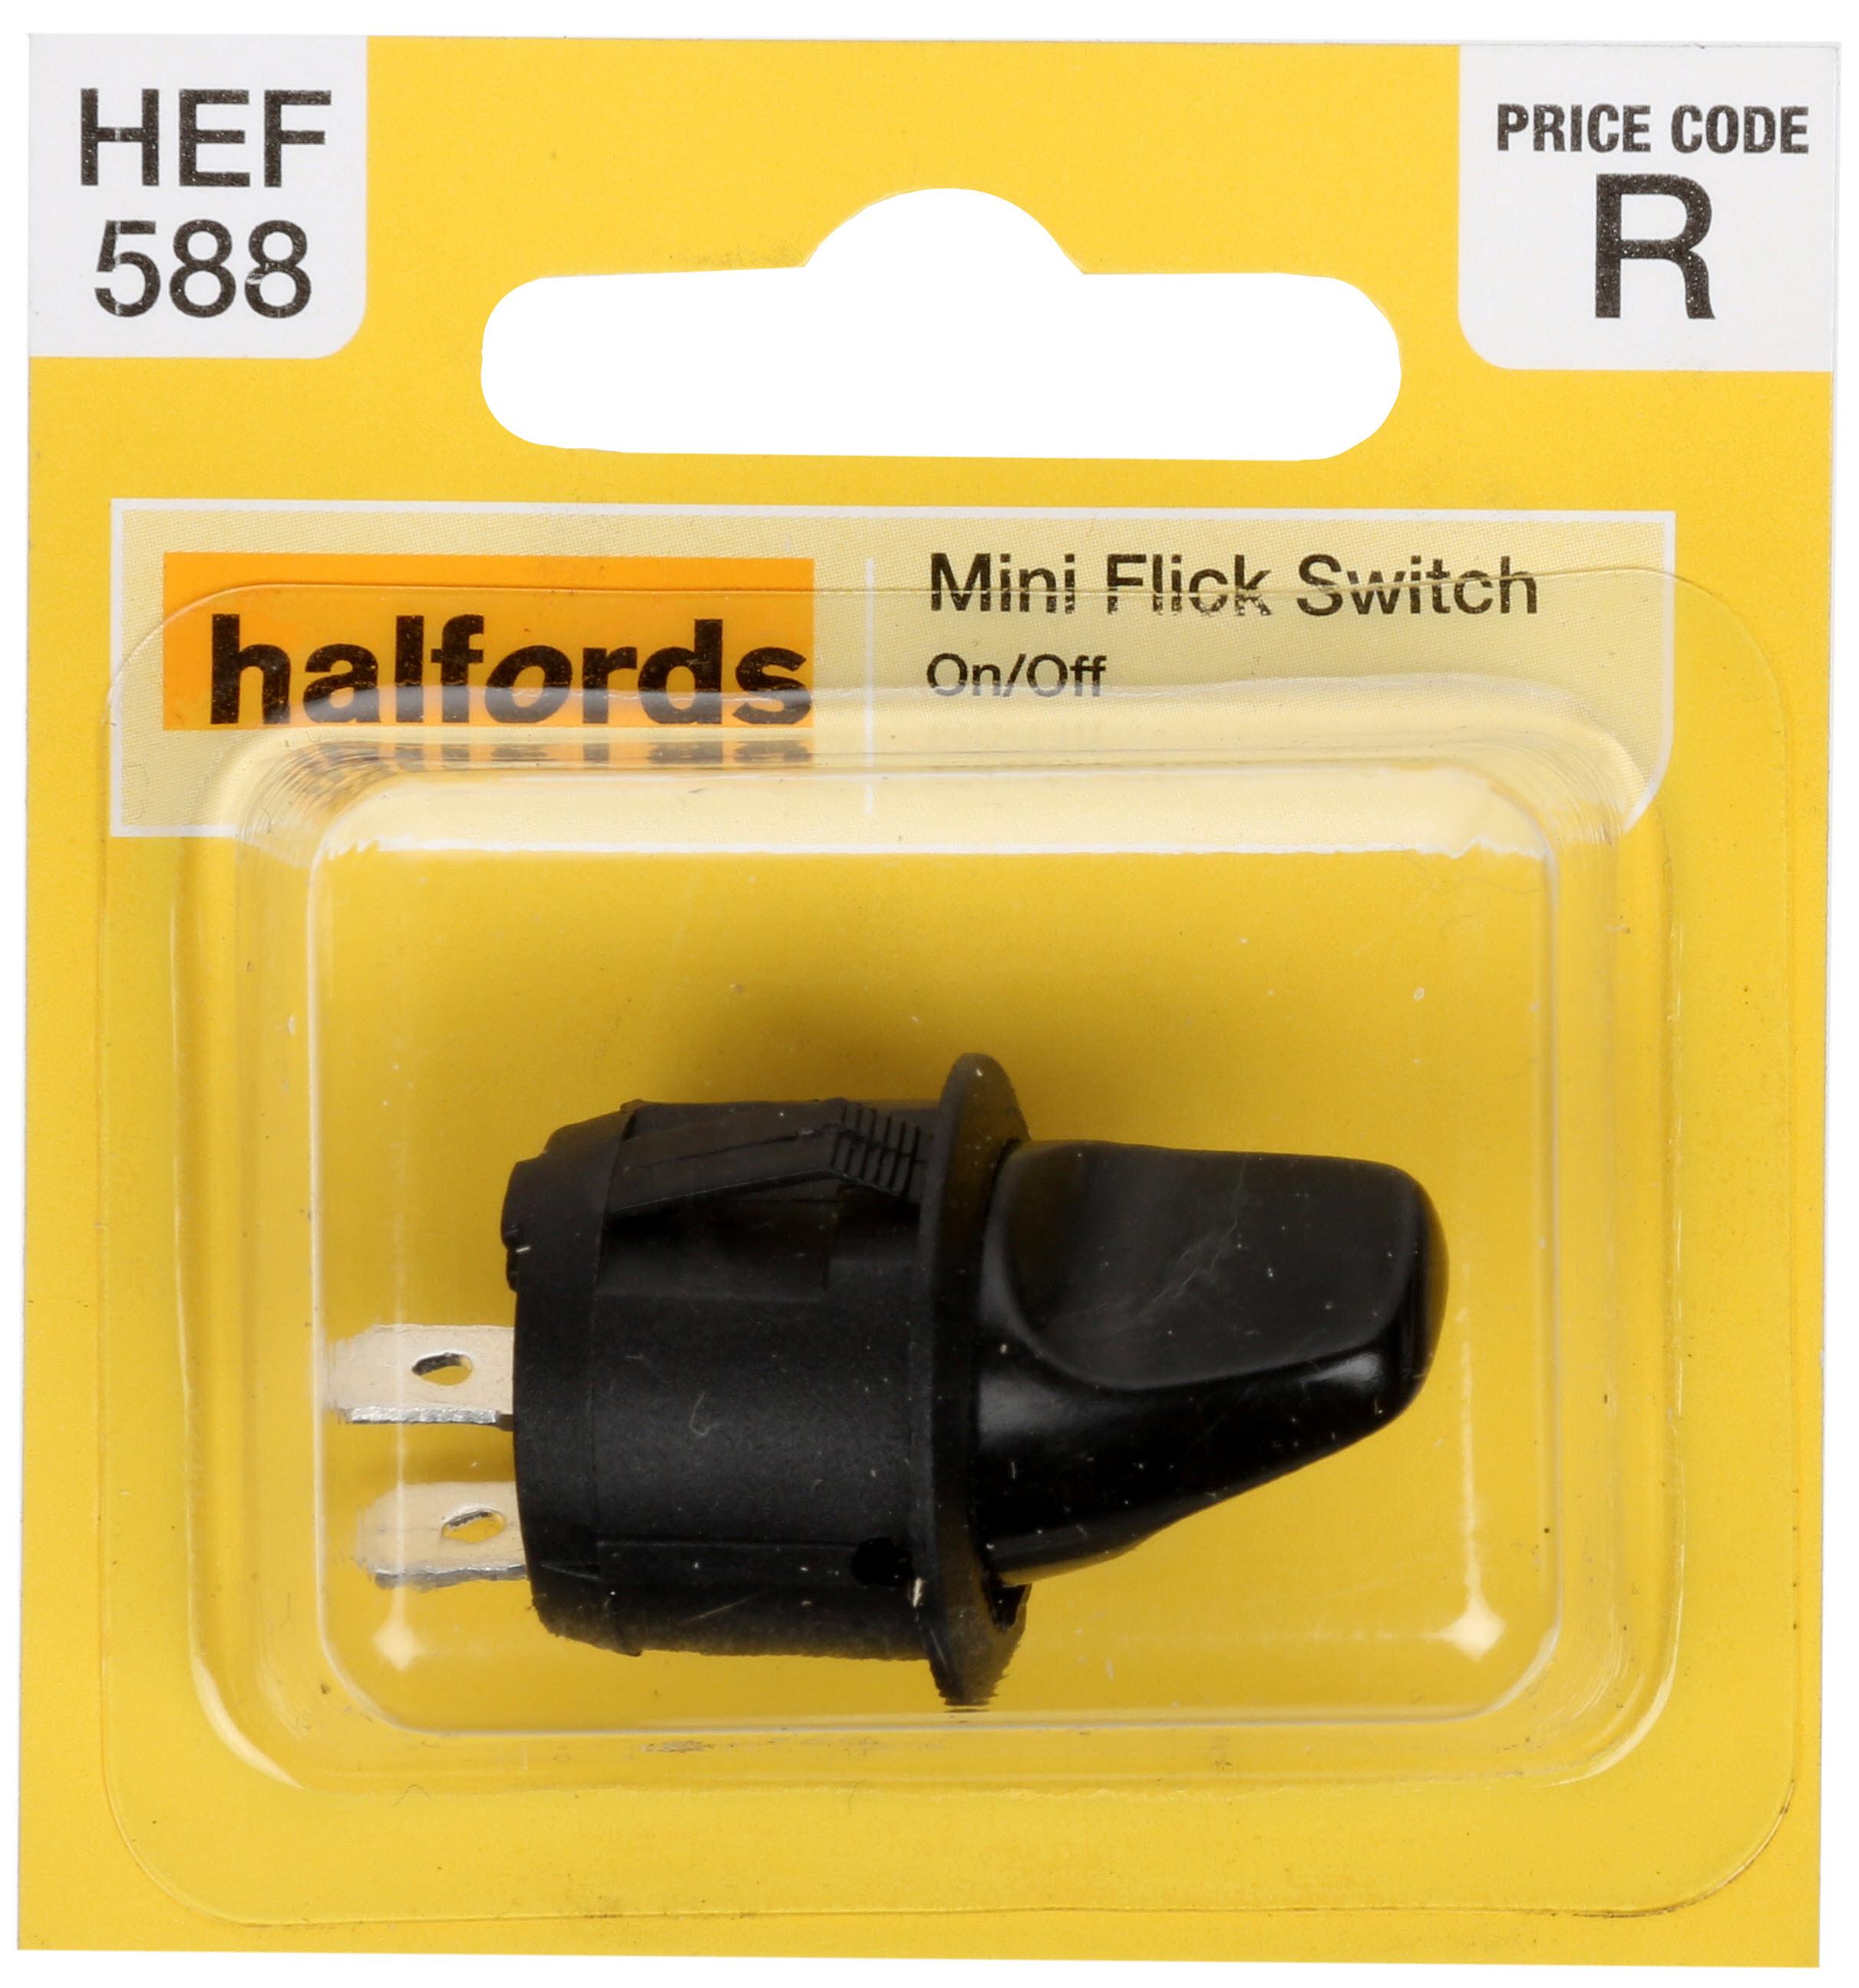 Halfords Mini Flick Switch On/Off Non Illuminated (Hef588)